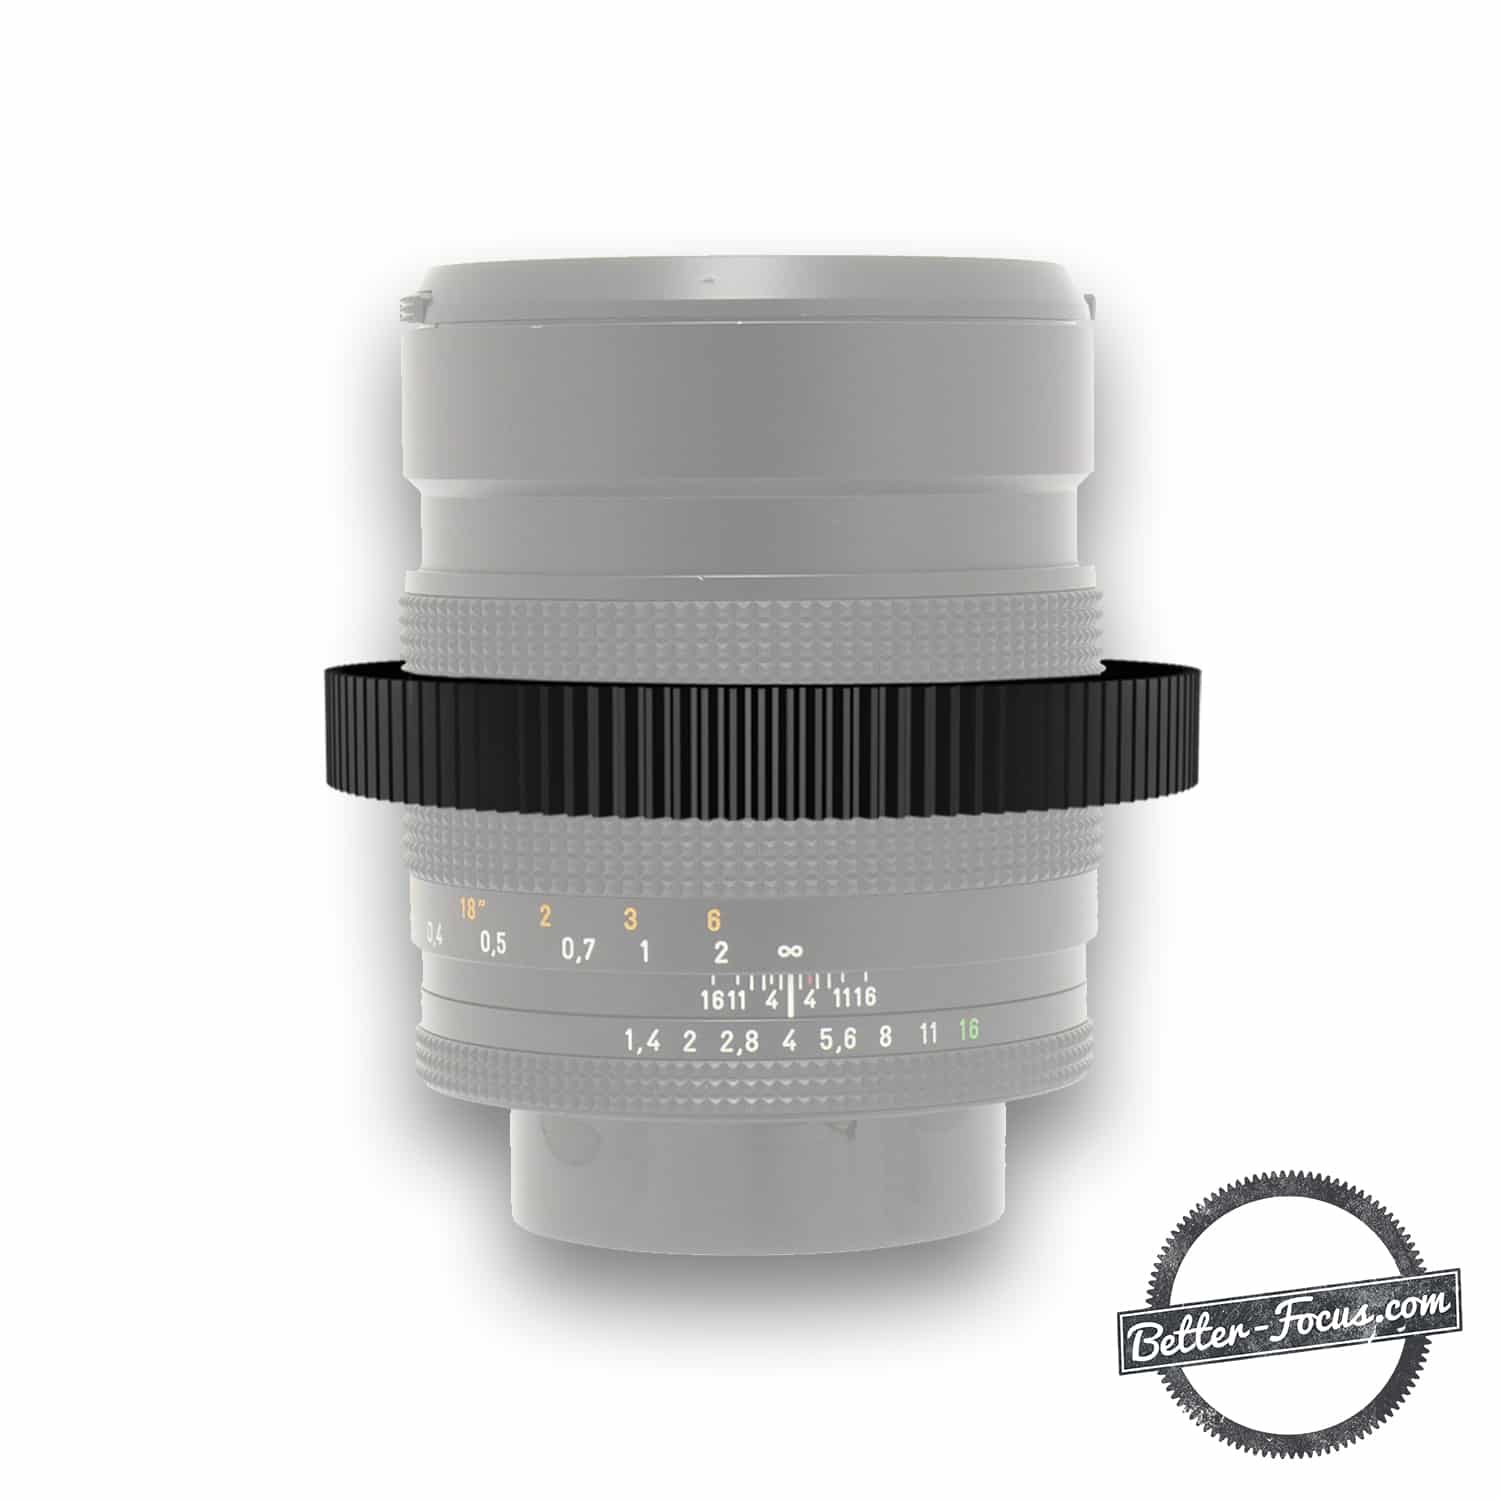 Follow Focus Gear for CONTAX ZEISS 35MM F1.4 DISTAGON  lens